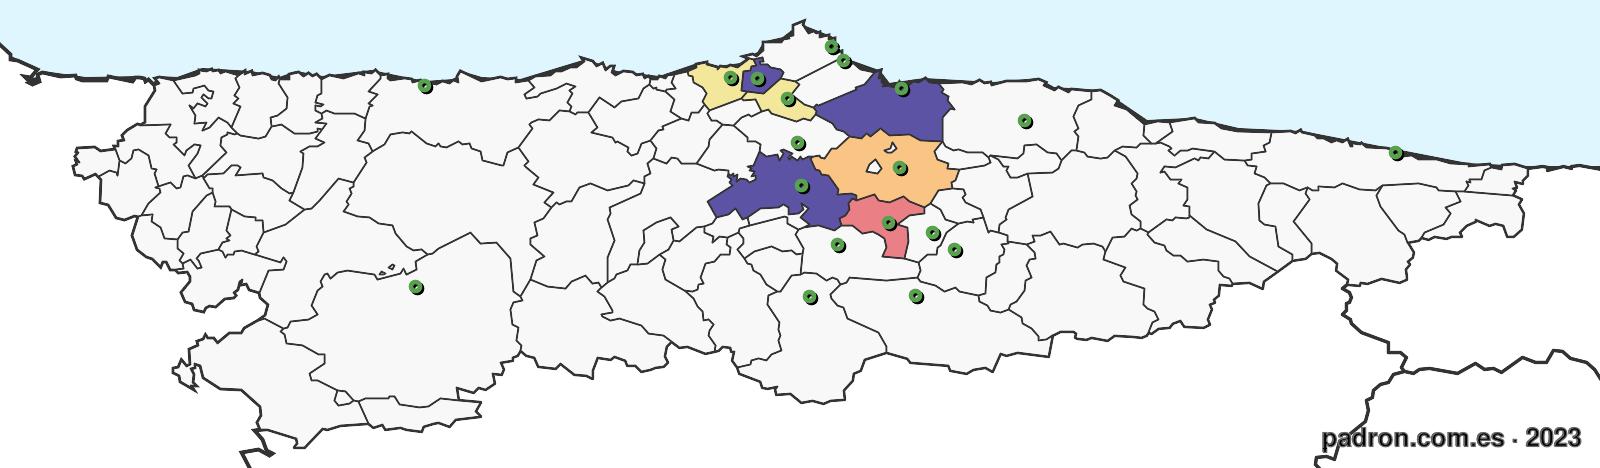 sirios en asturias.